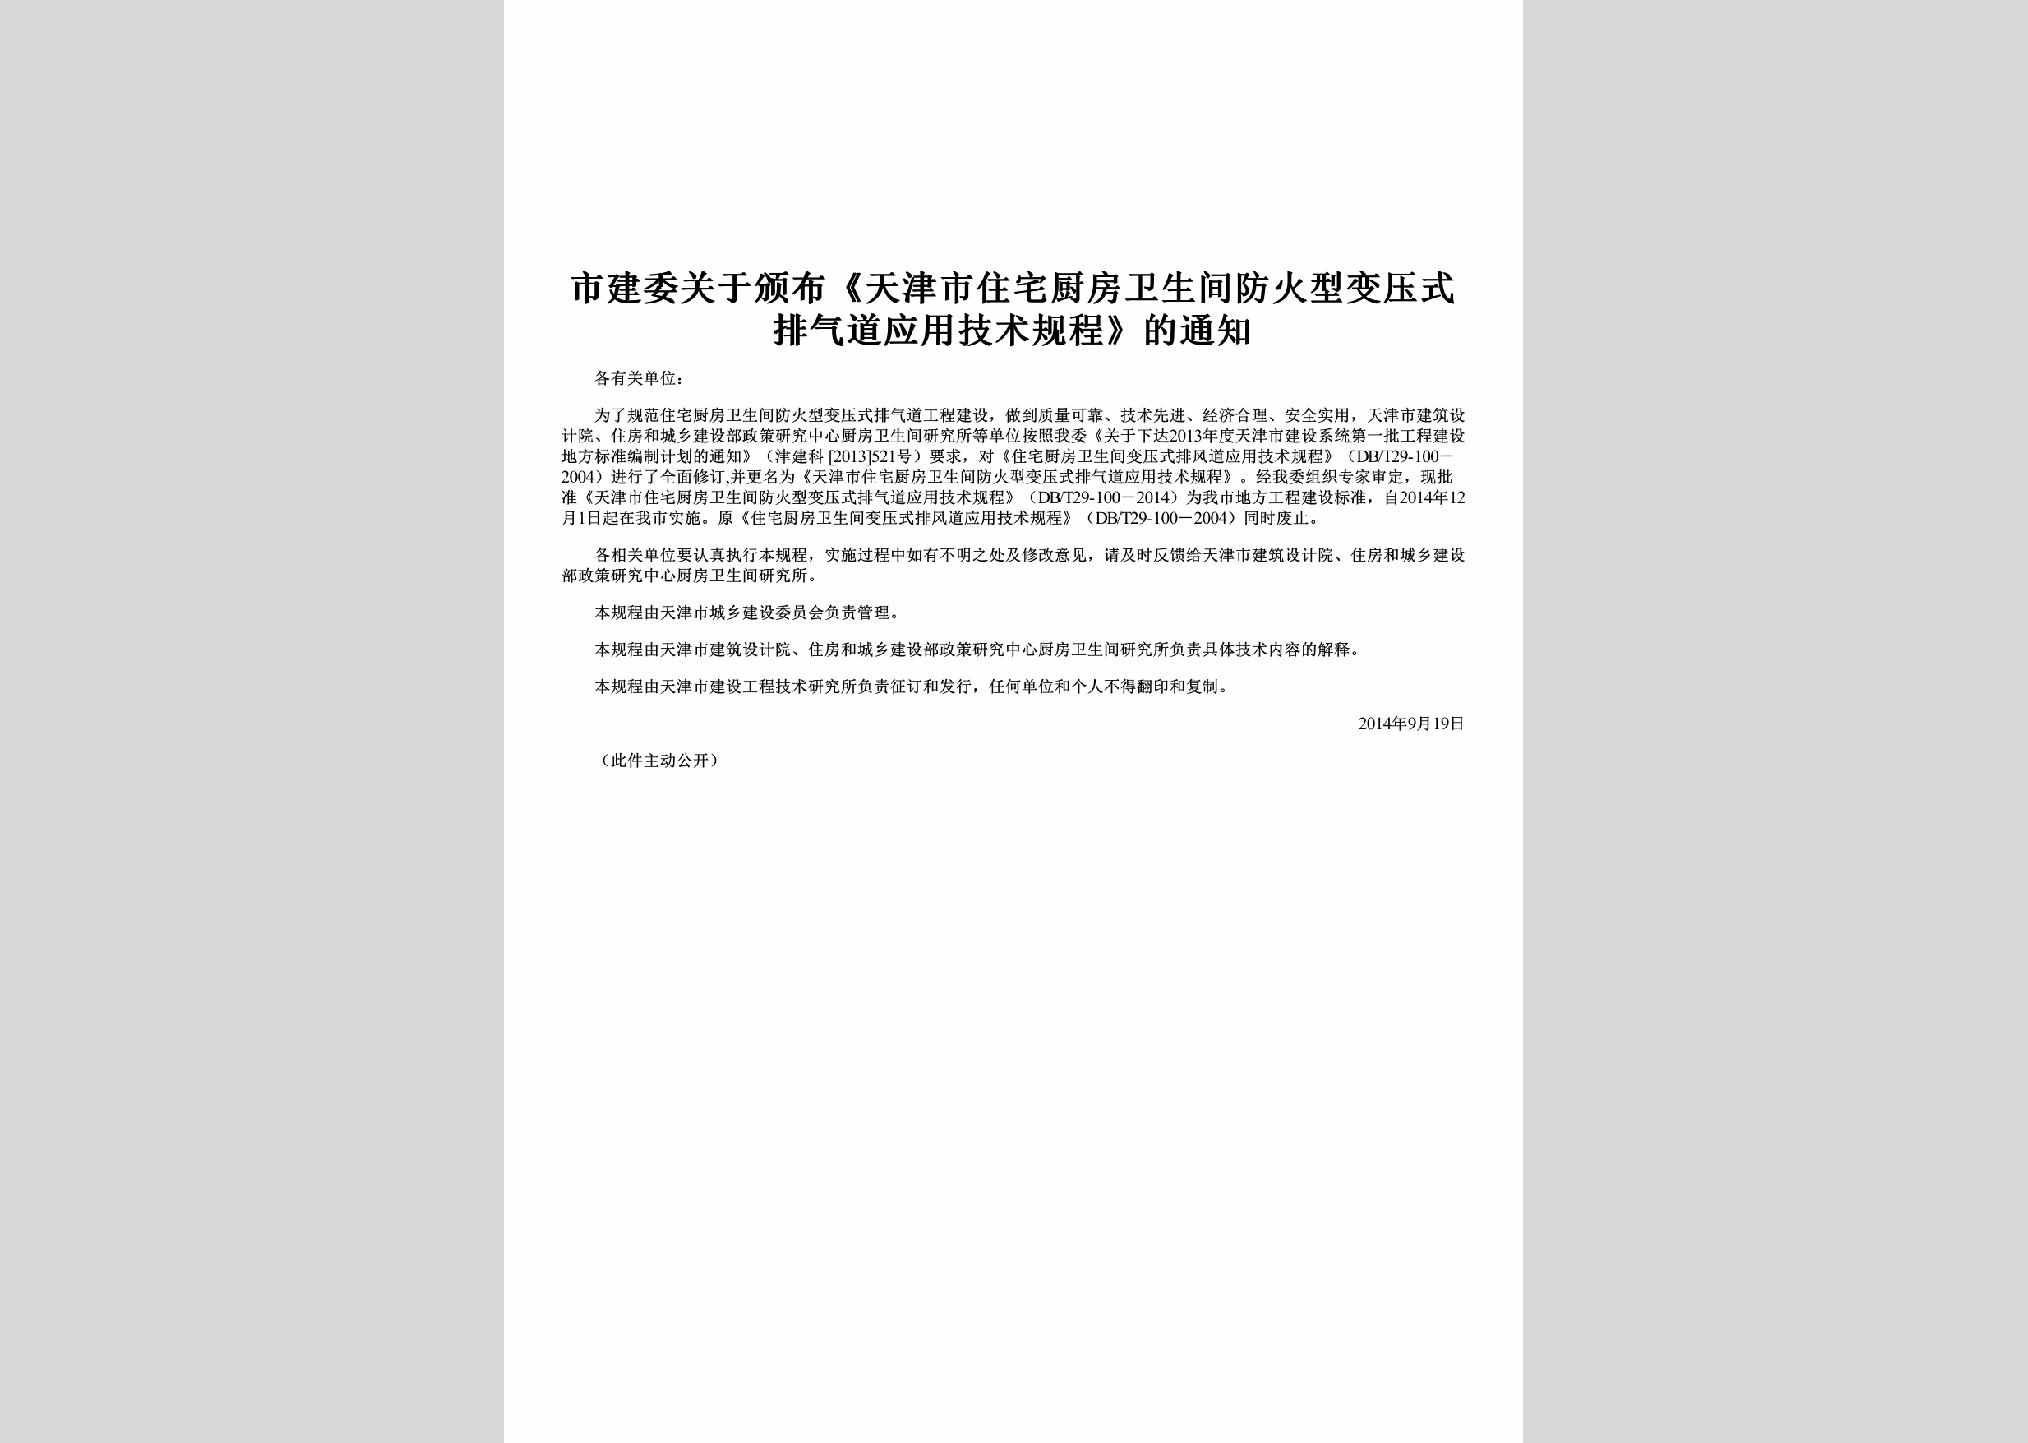 TJ-ZZCFWSJ-2014：关于颁布《天津市住宅厨房卫生间防火型变压式排气道应用技术规程》的通知